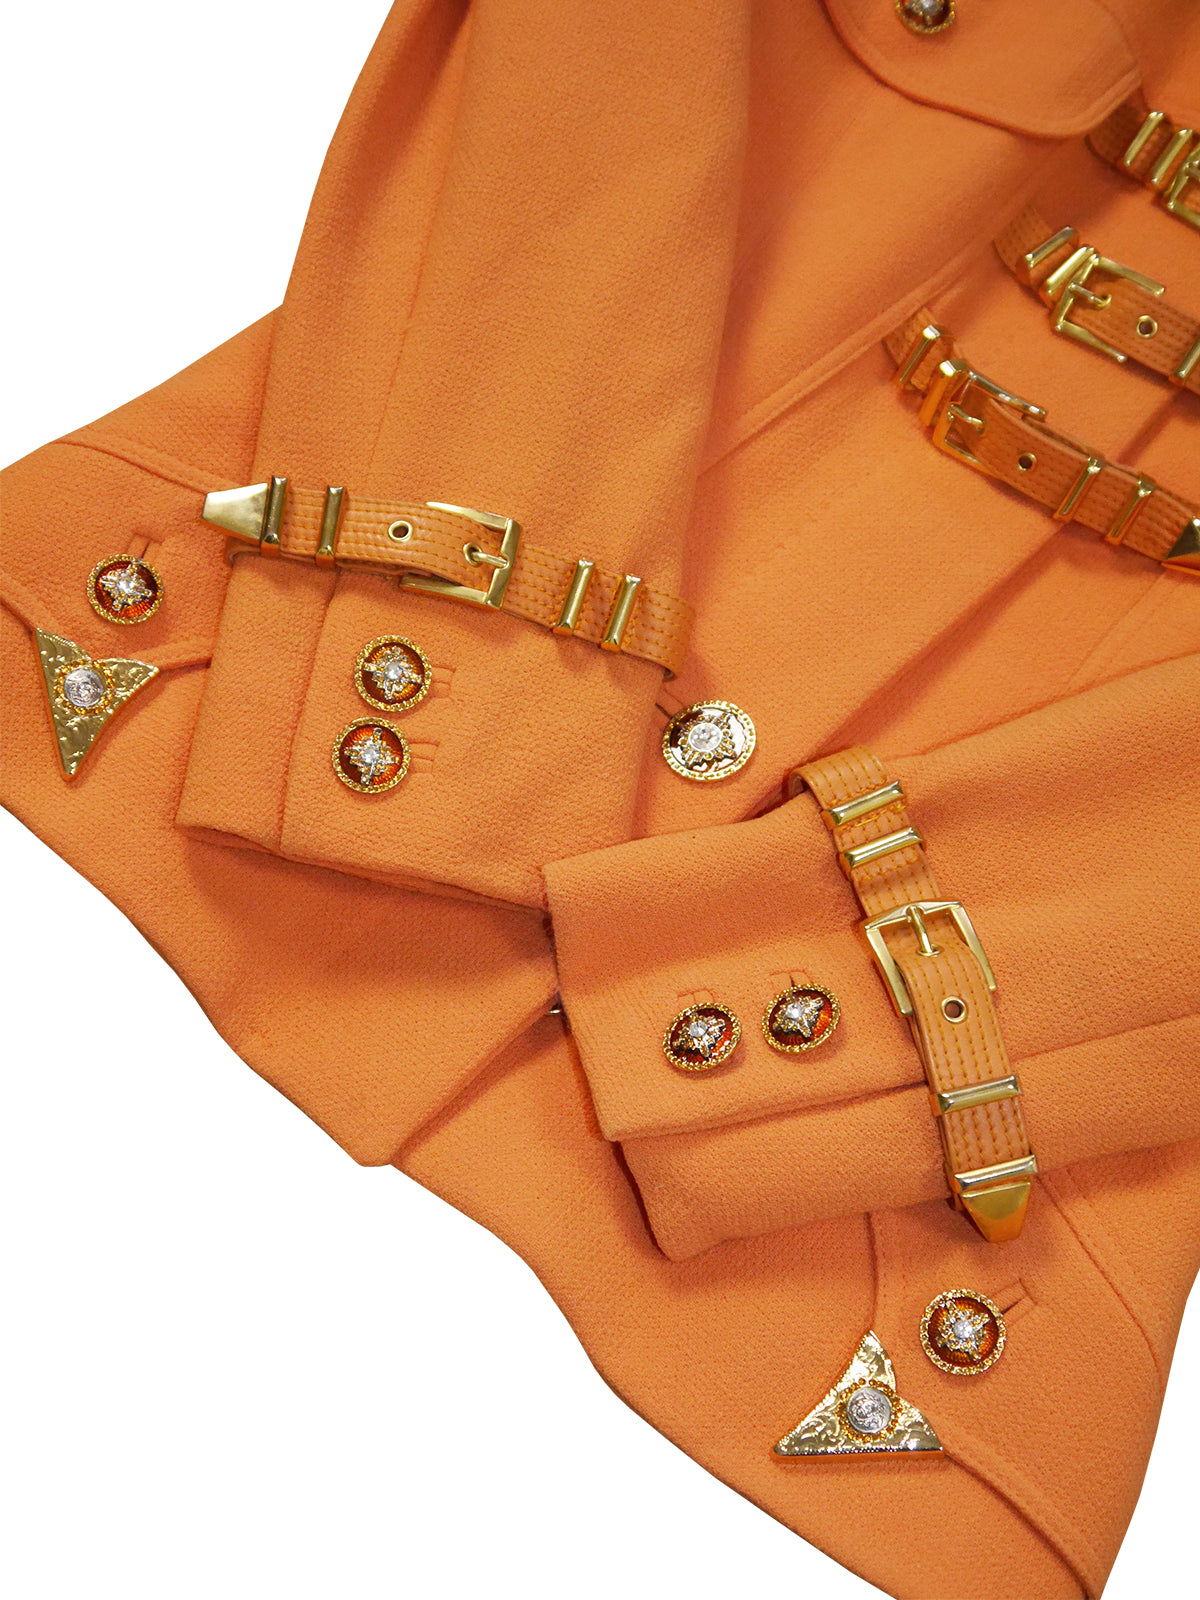 GIANNI VERSACE Couture Fall 1992 Tangerine Bondage Skirt Suit